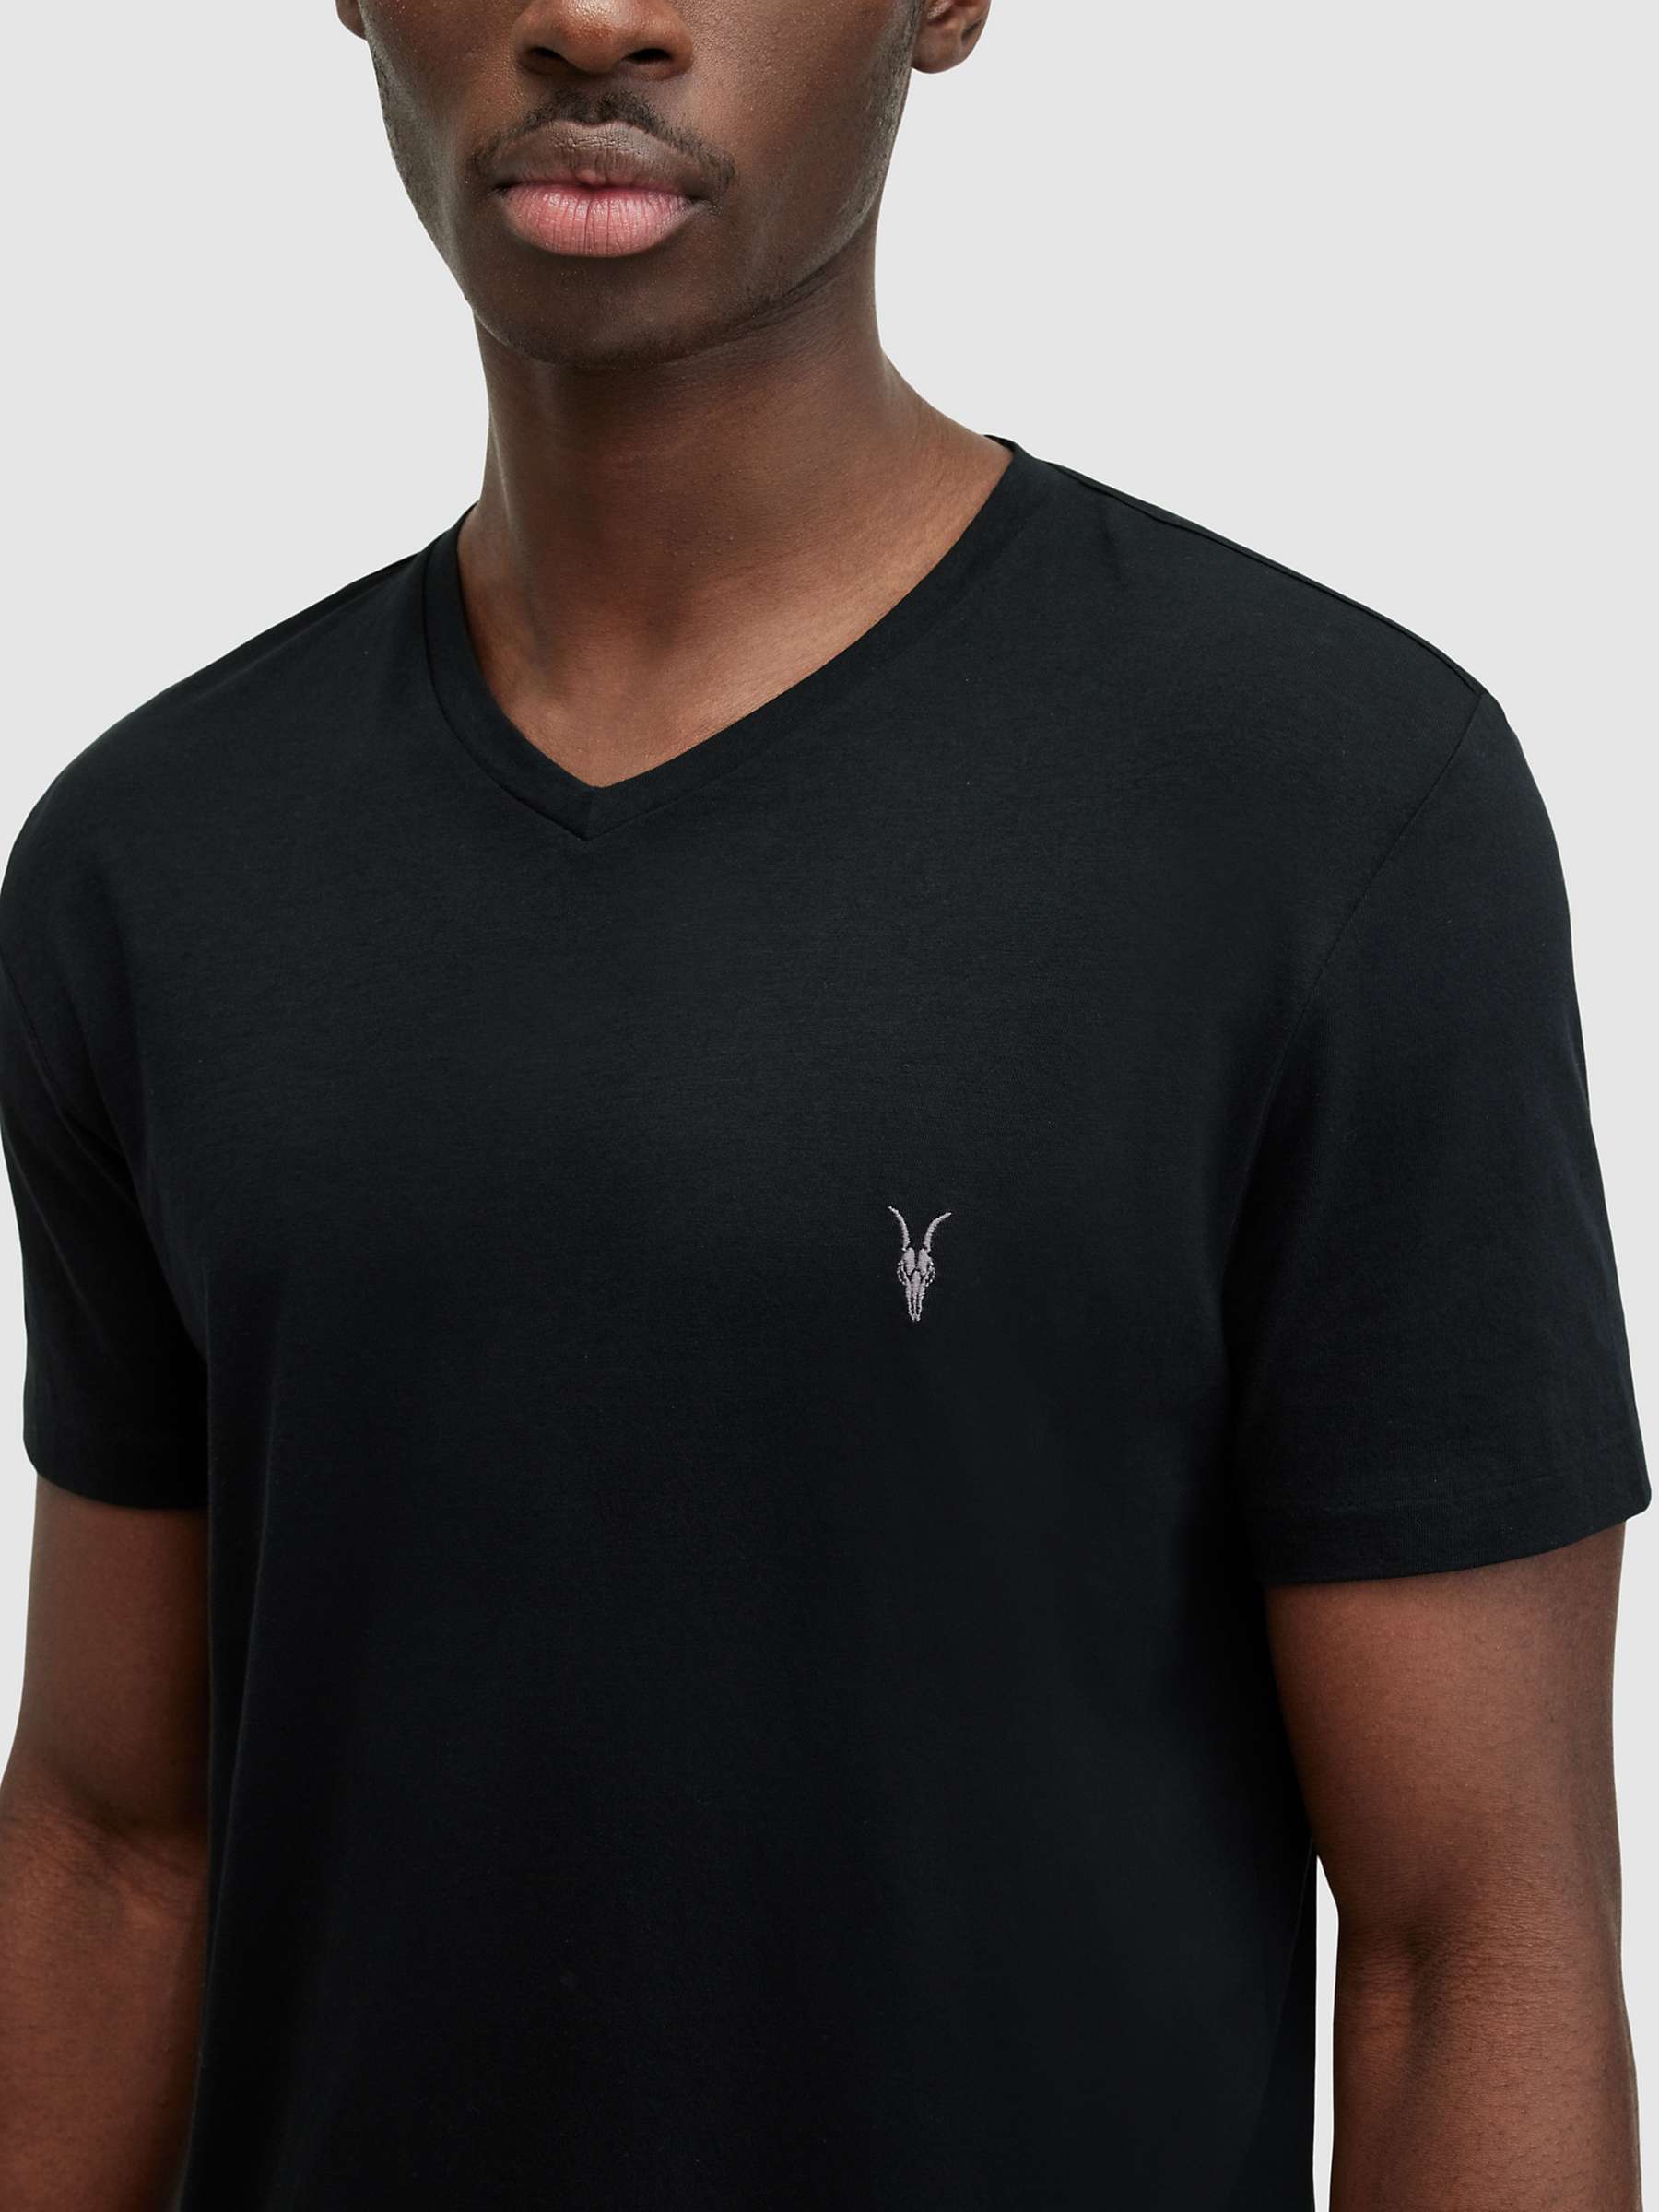 Buy AllSaints Tonic V-Neck T-Shirt Online at johnlewis.com